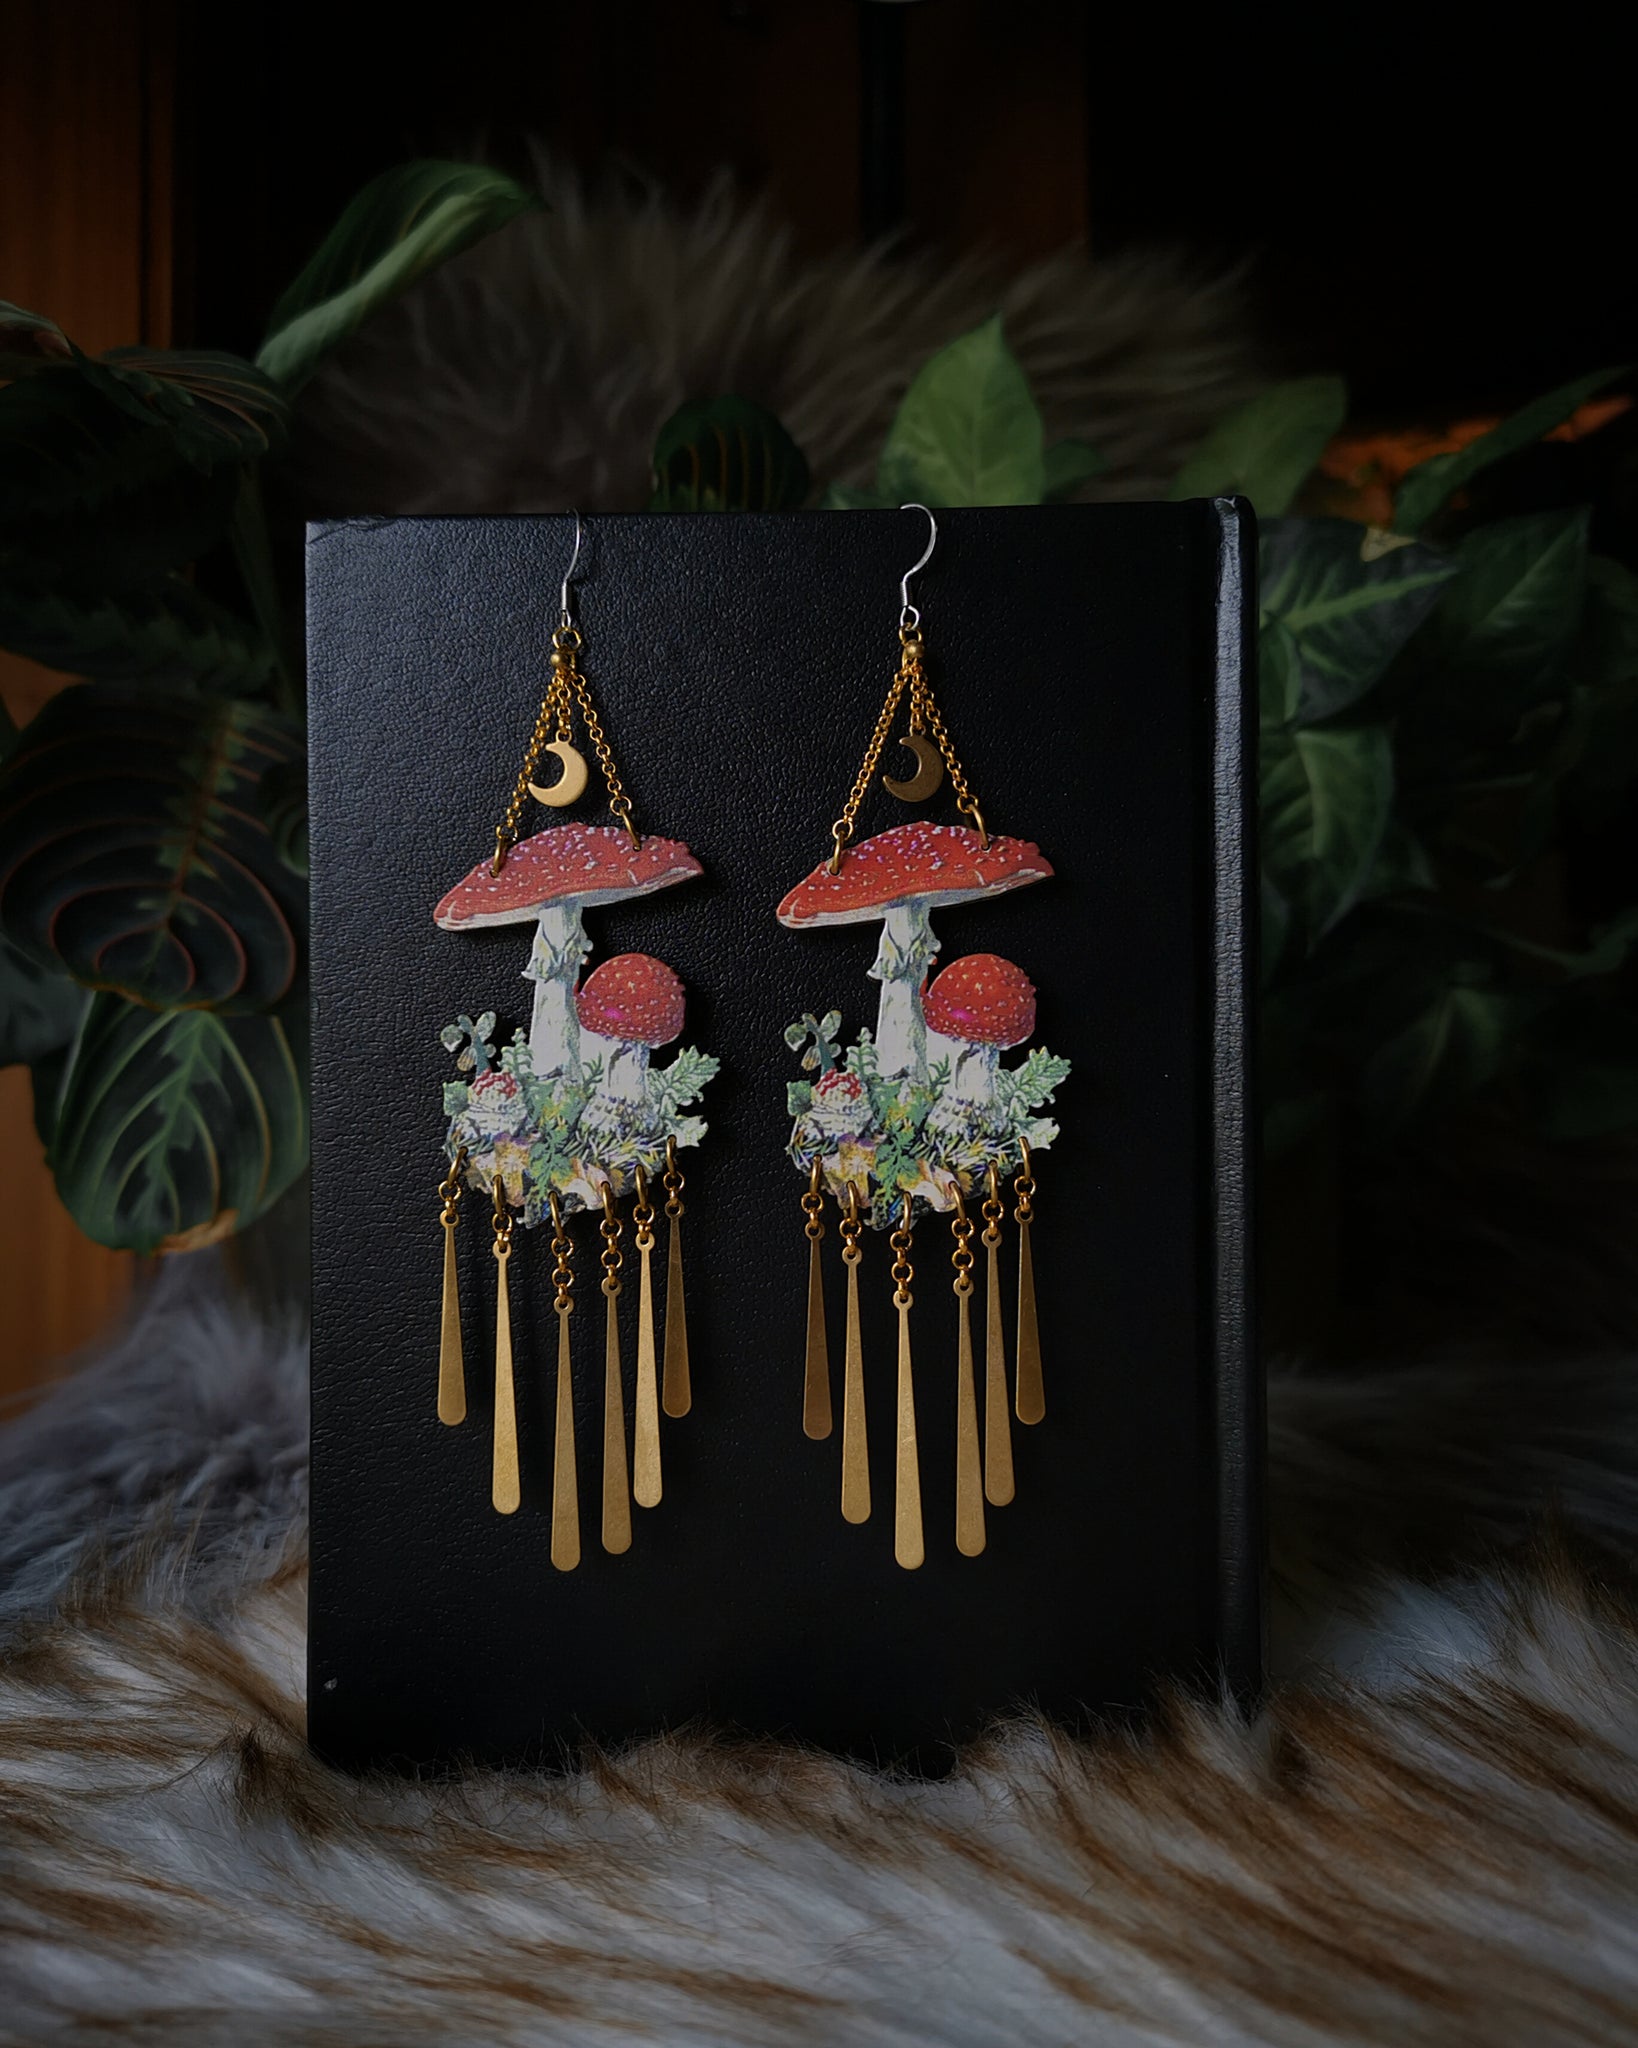 "Fly agaric" wooden earrings